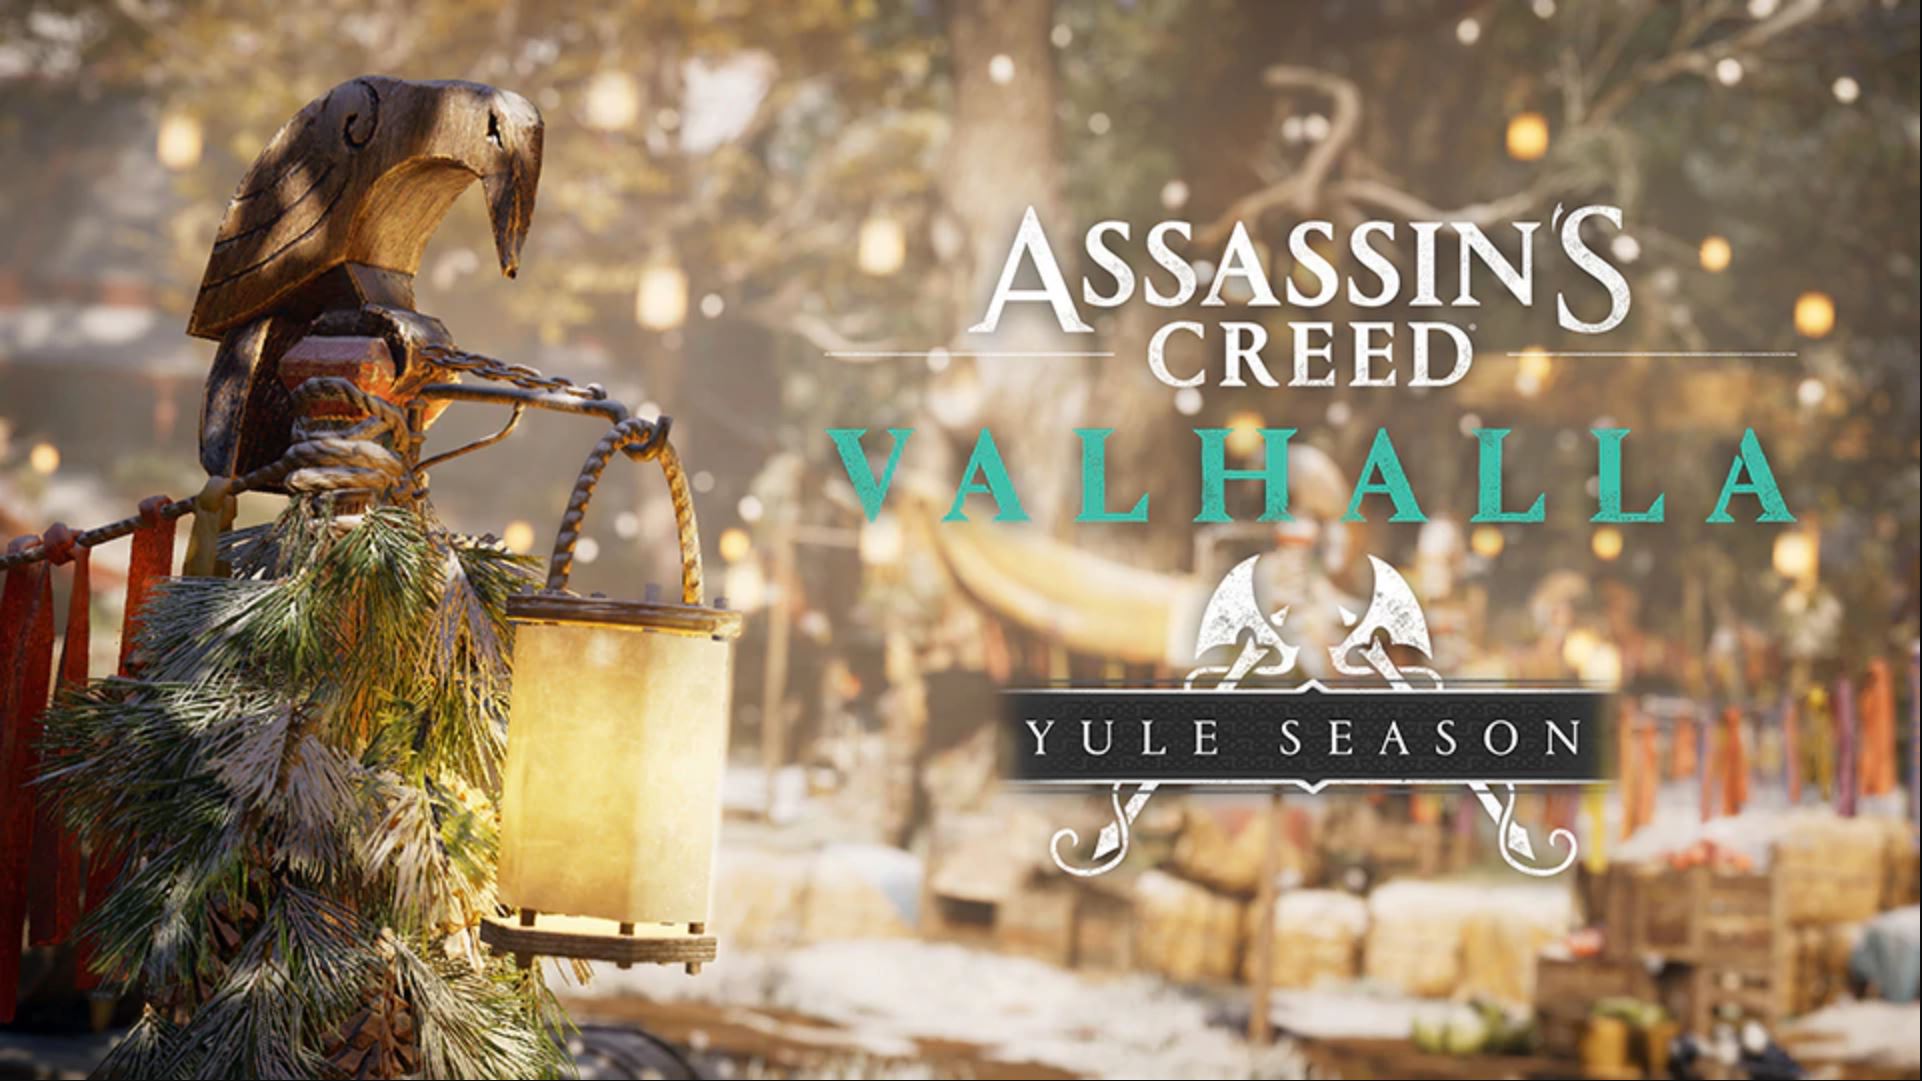 Assassin's Creed Valhalla Yule Season Brings Festive Spirit To England